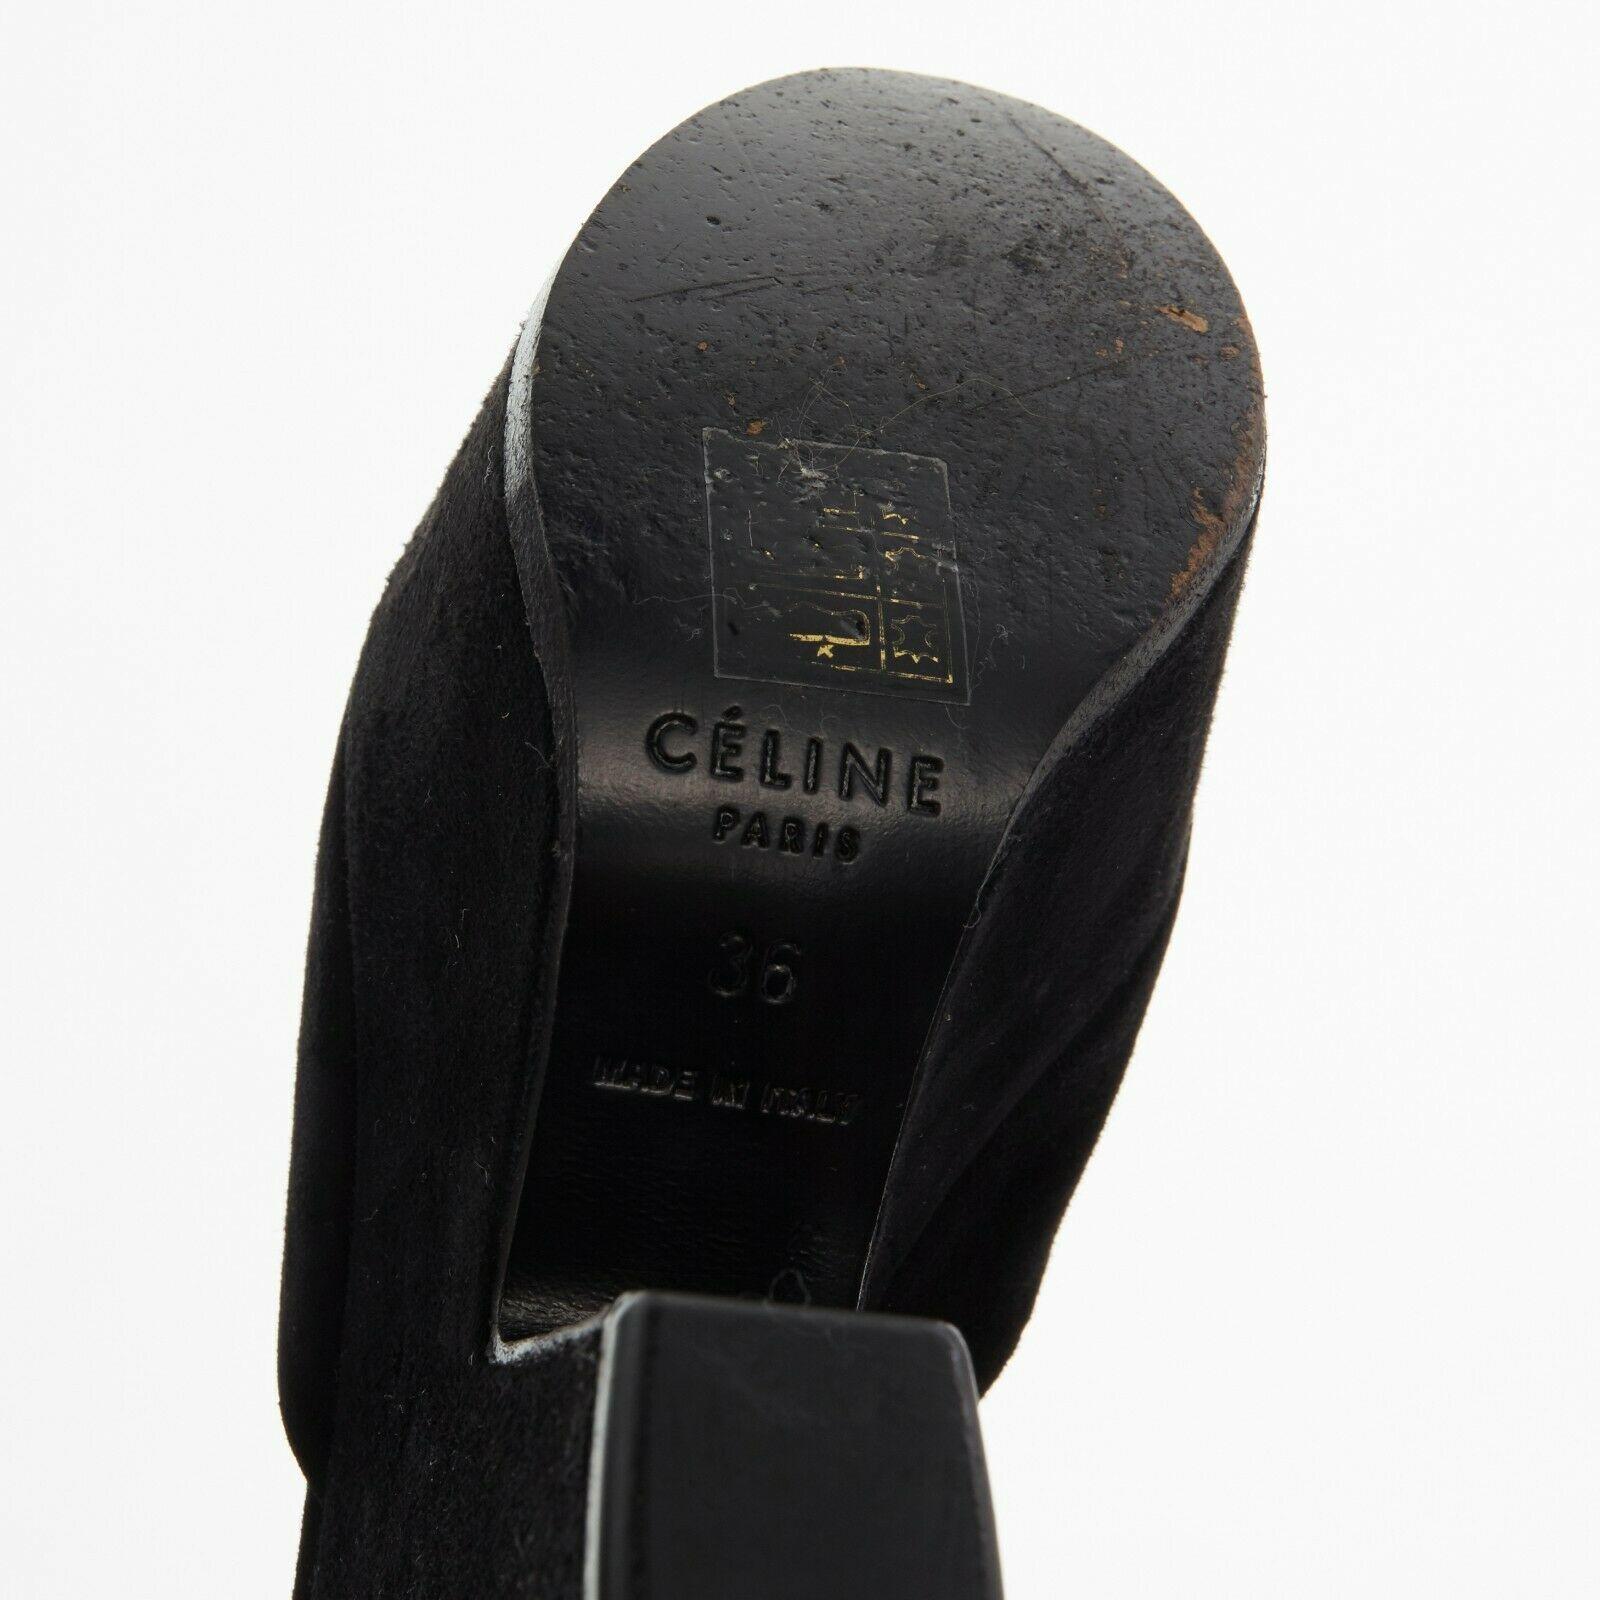 CELINE PHOEBE PHILO black suede cut out platform wedge ankle cuff heels EU36 4